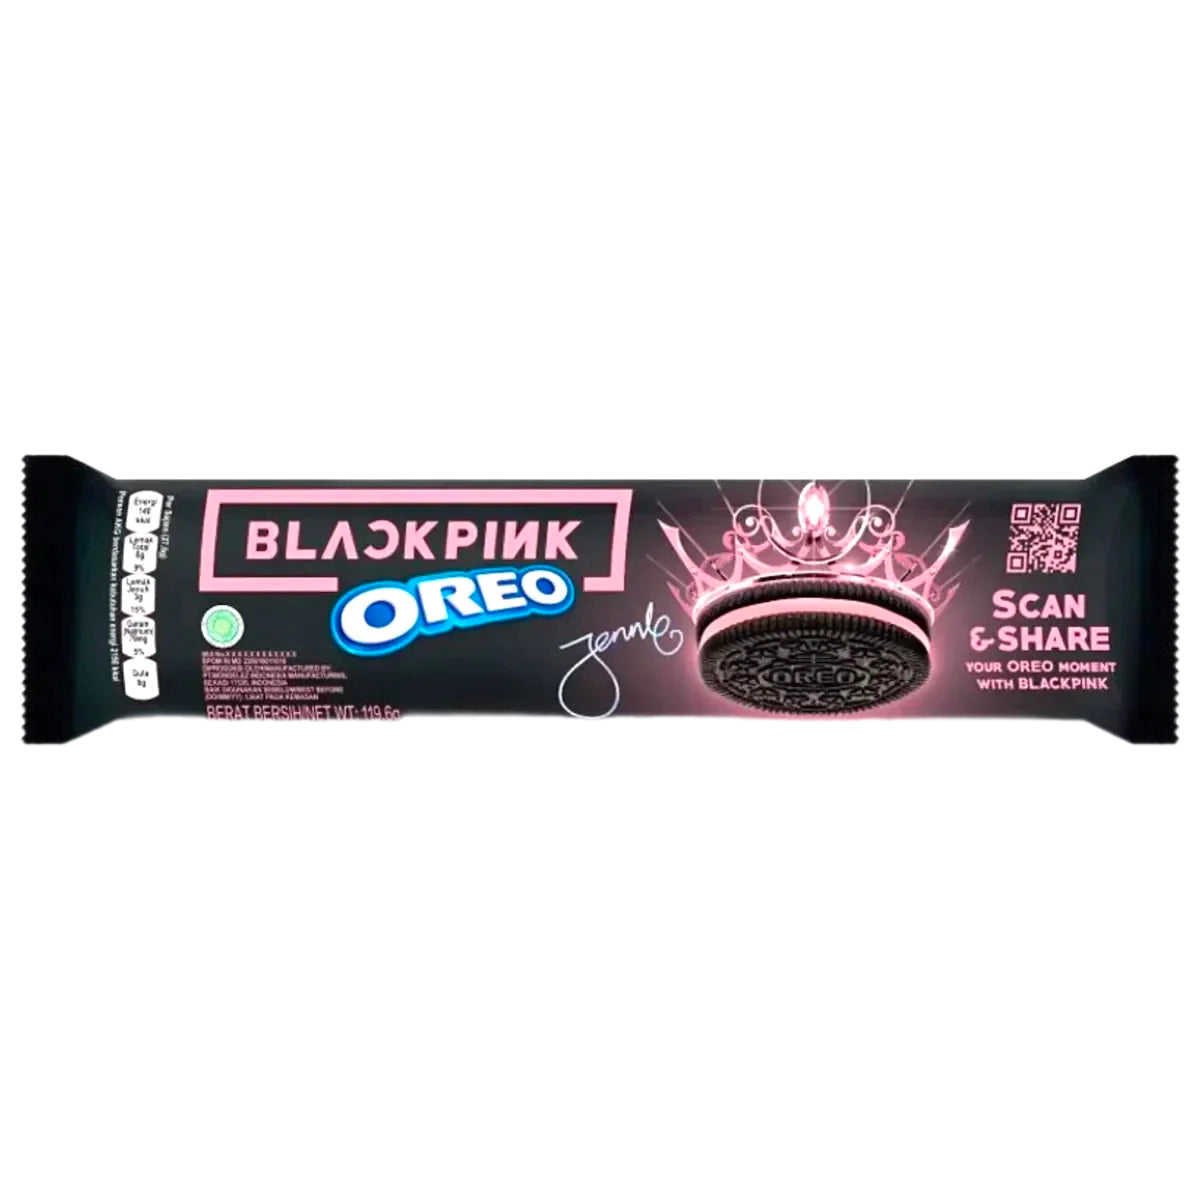 OREO BLACKPINK STRAWBERRY ICE CREAM (120G) LIMITED EDITION (24 Pack)